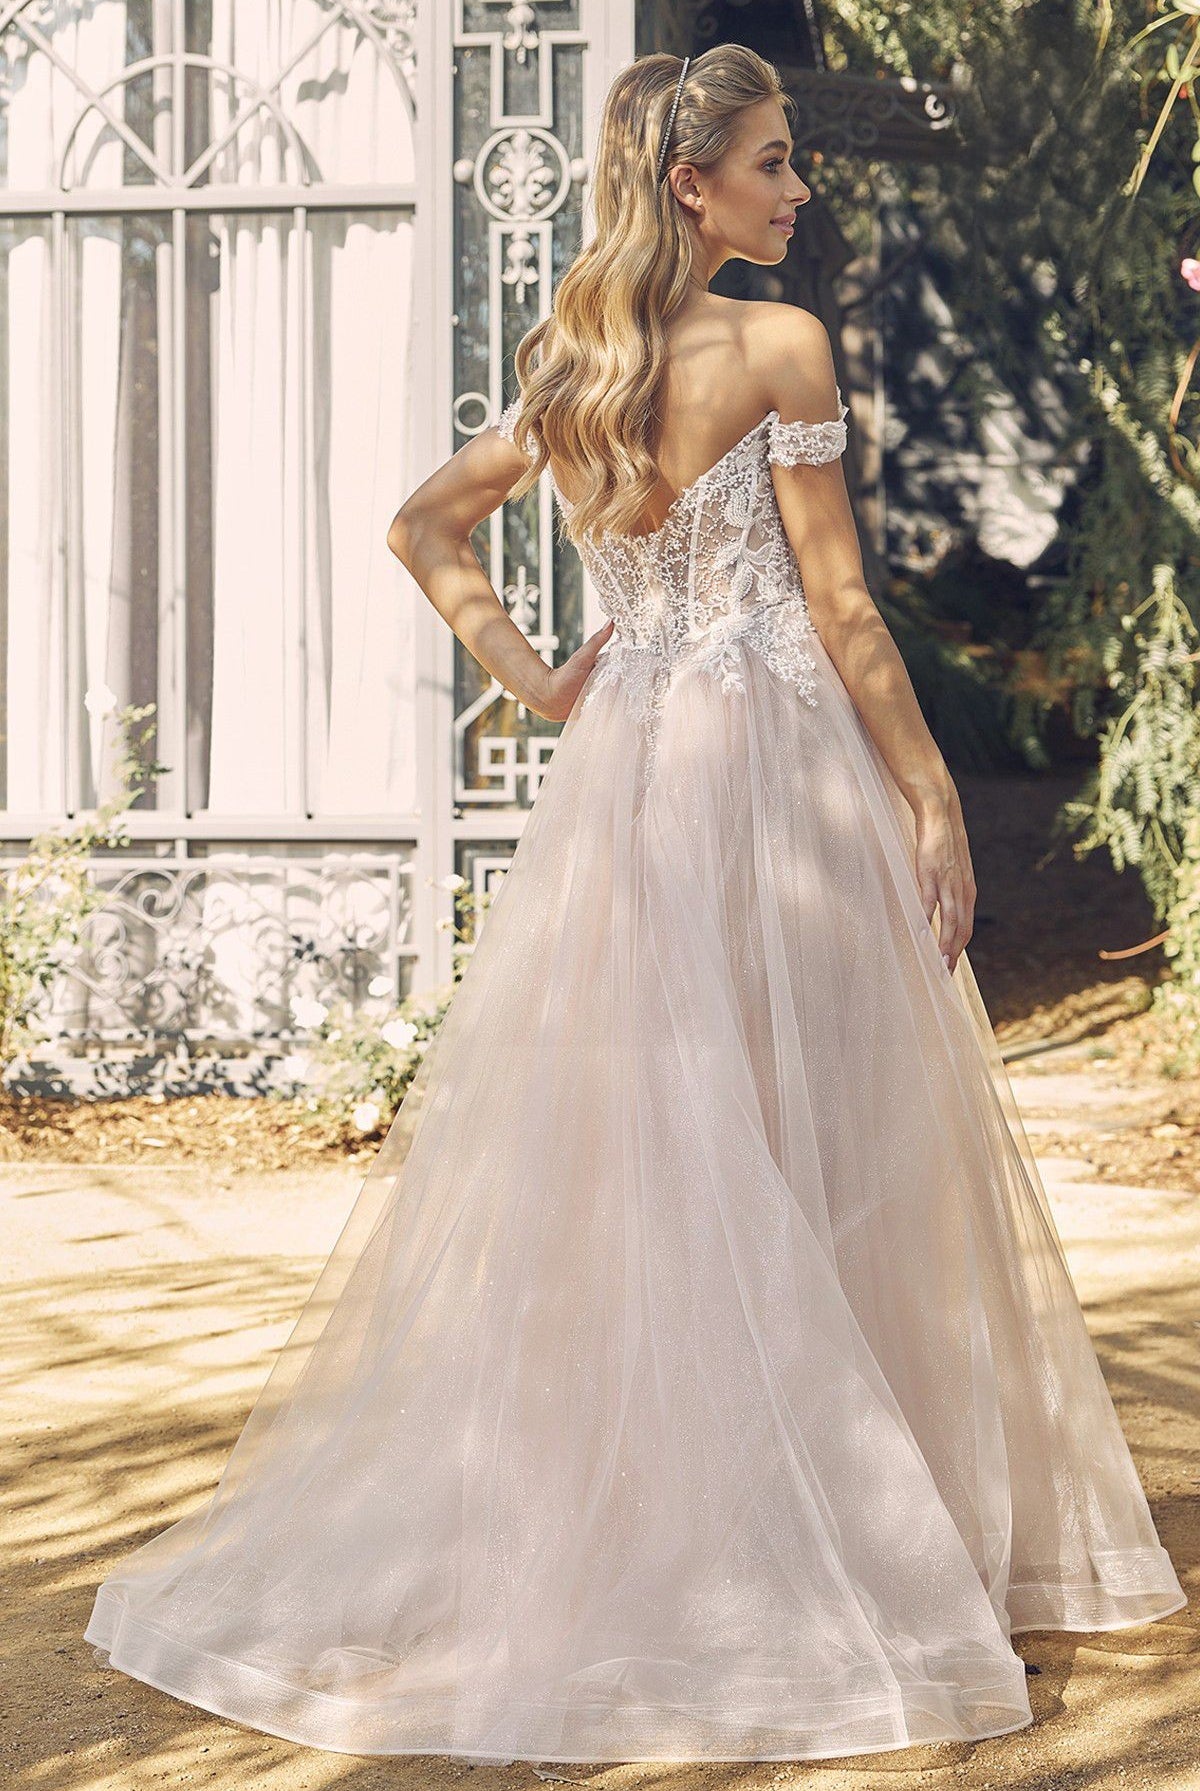 Glitter Tulle Off-Shoulder Floral Applique Long Wedding Dress NXC1107W-Wedding Dress-smcfashion.com